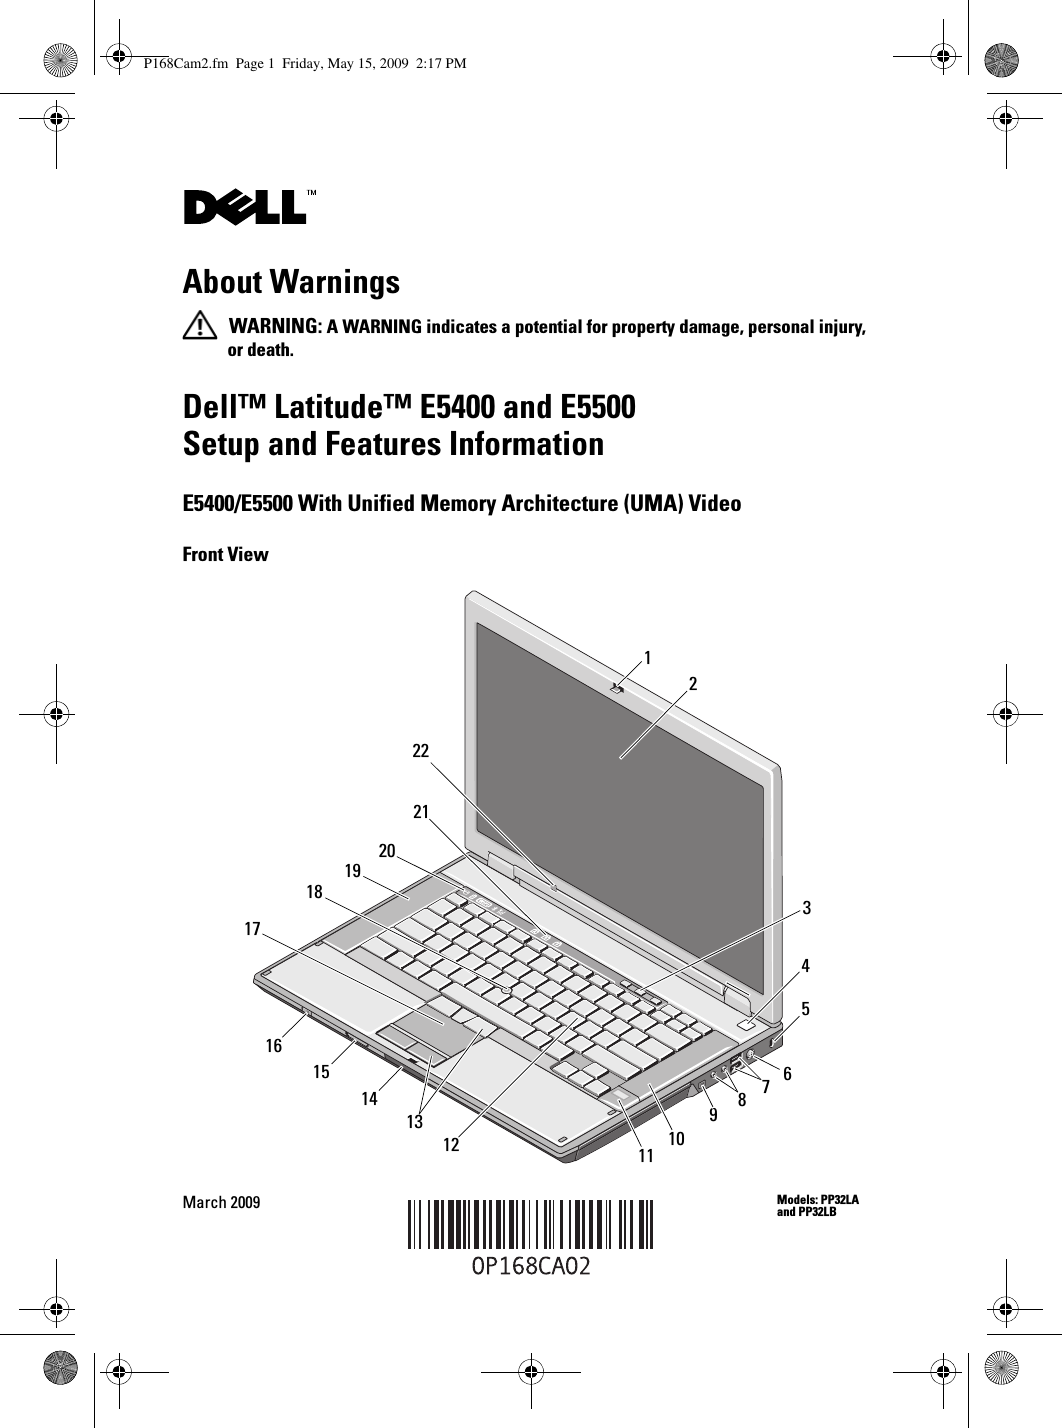 Page 1 of 10 - Dell Dell-Latitude-E5400-Mid-2008-Tech-Sheet- Latitude E5400 Setup And Features Information Tech Sheet  Dell-latitude-e5400-mid-2008-tech-sheet